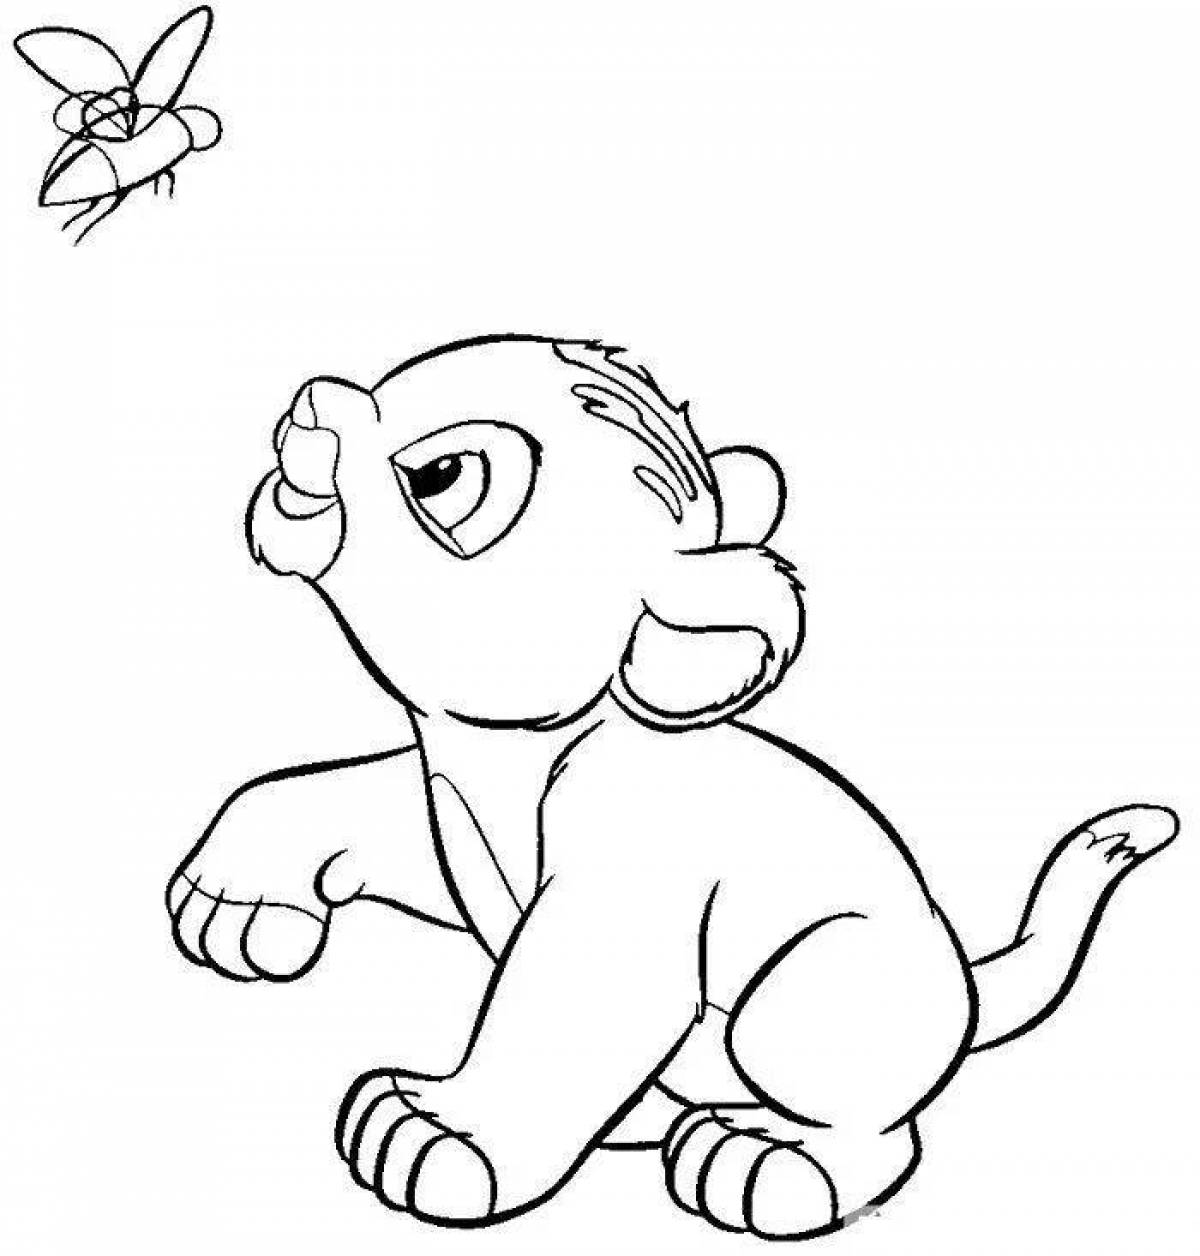 Coloring book shiny lion cub